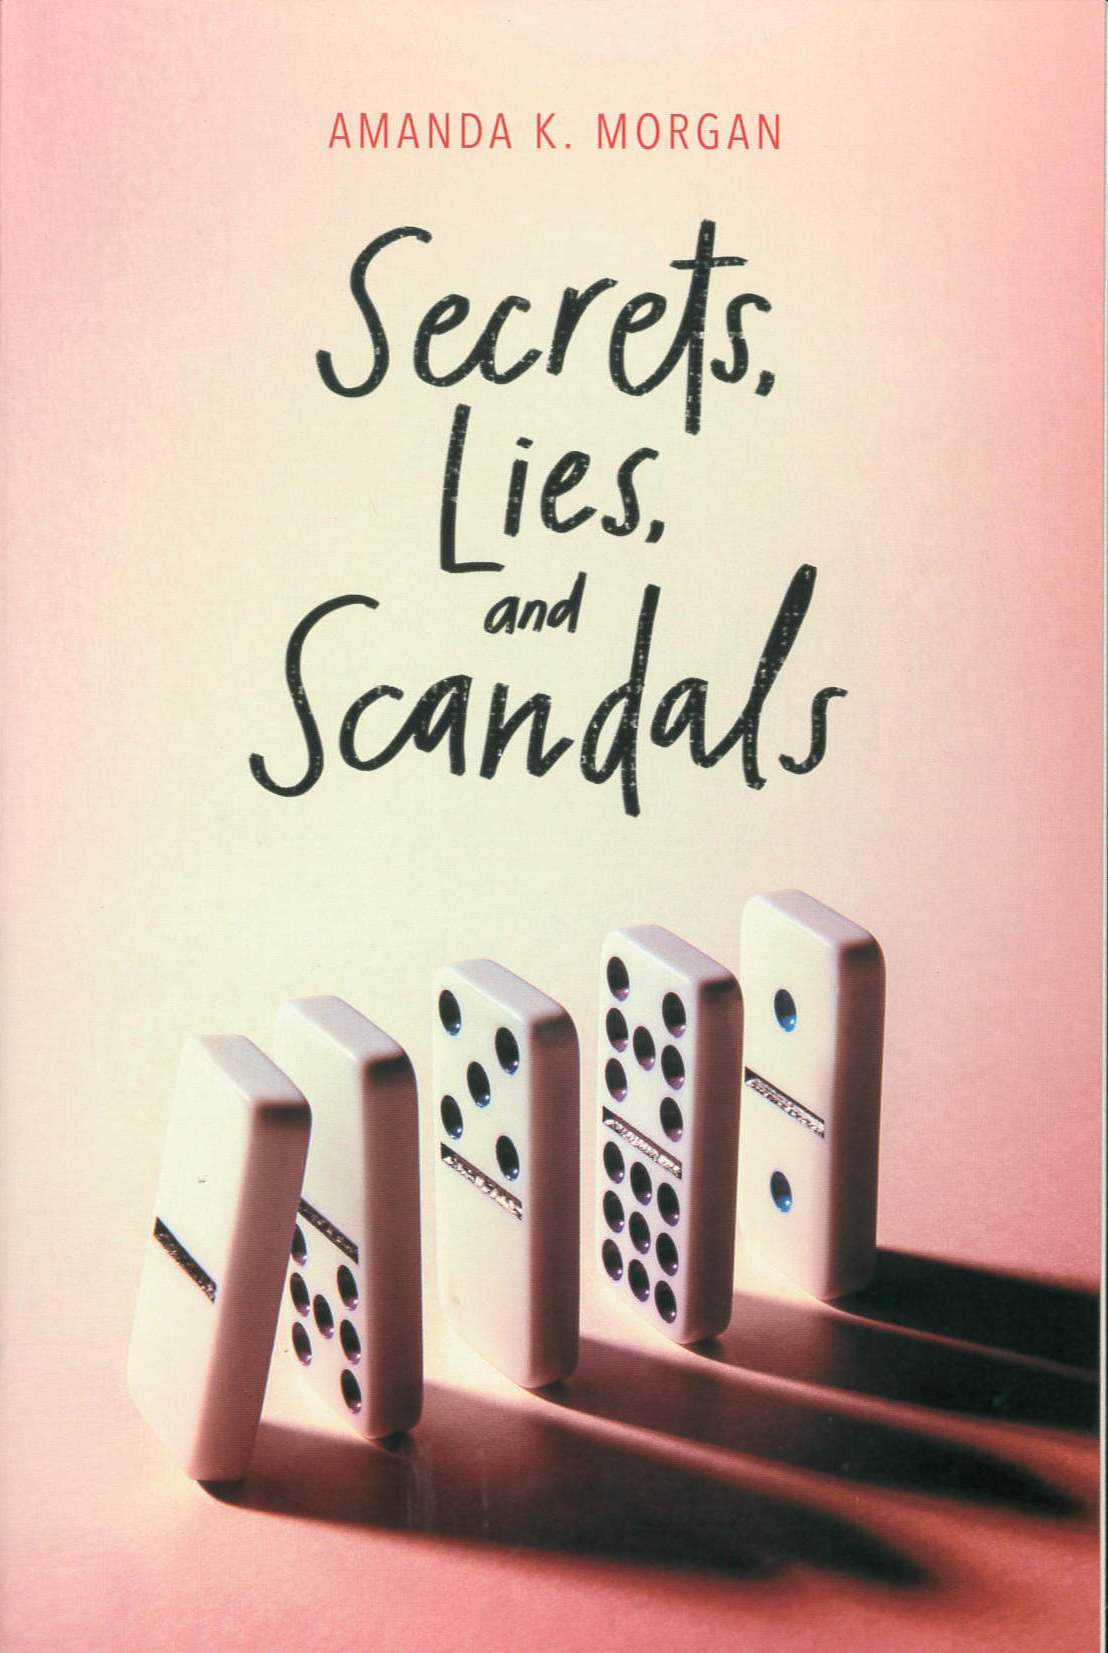 Secrets, lies, and scandals /